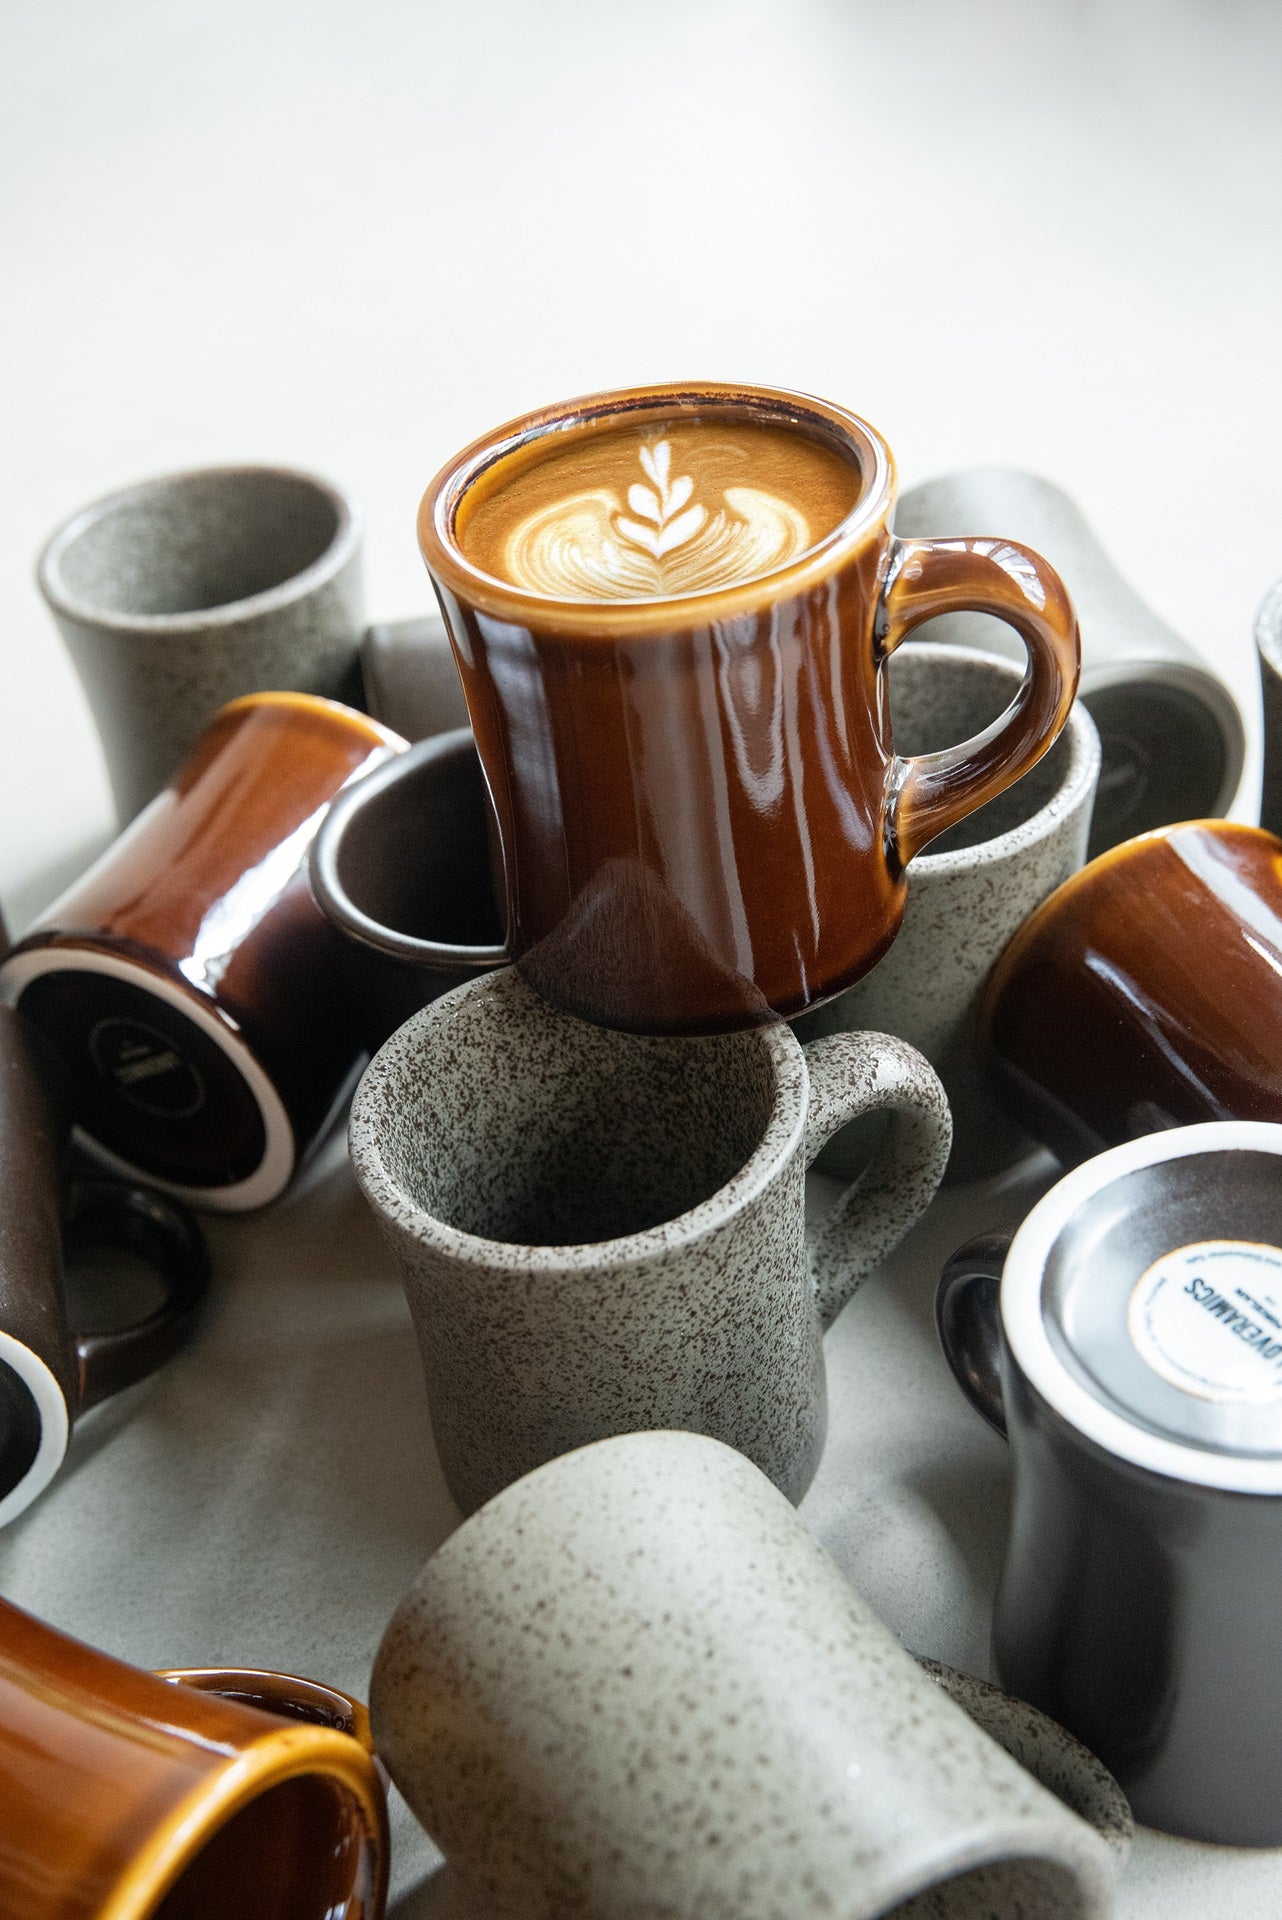 Branded Stars 12 oz. Latte Mug – Bridgette Raes Style Group Shop